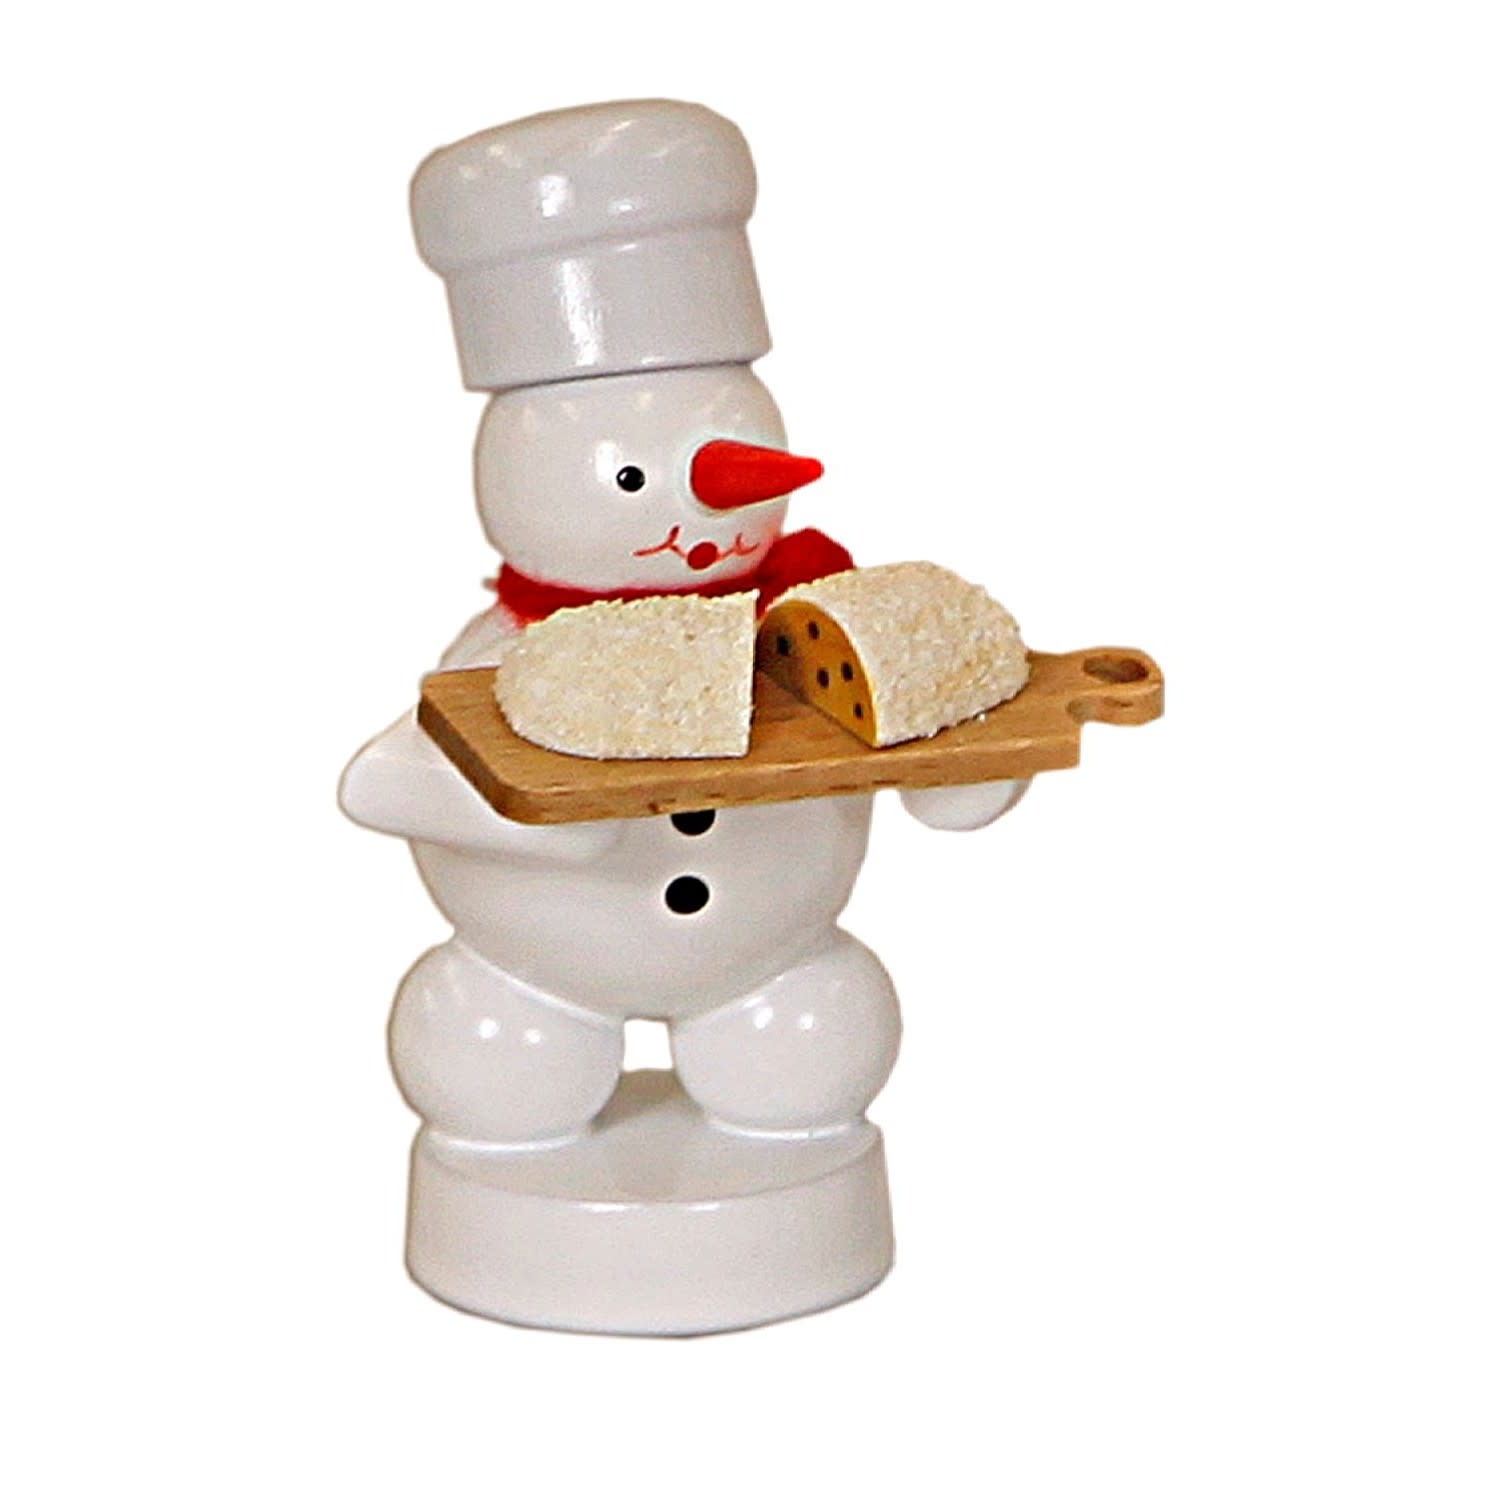 Zenker 001-200-07-1 Snowman Baker With Stollen Bread  3 inches